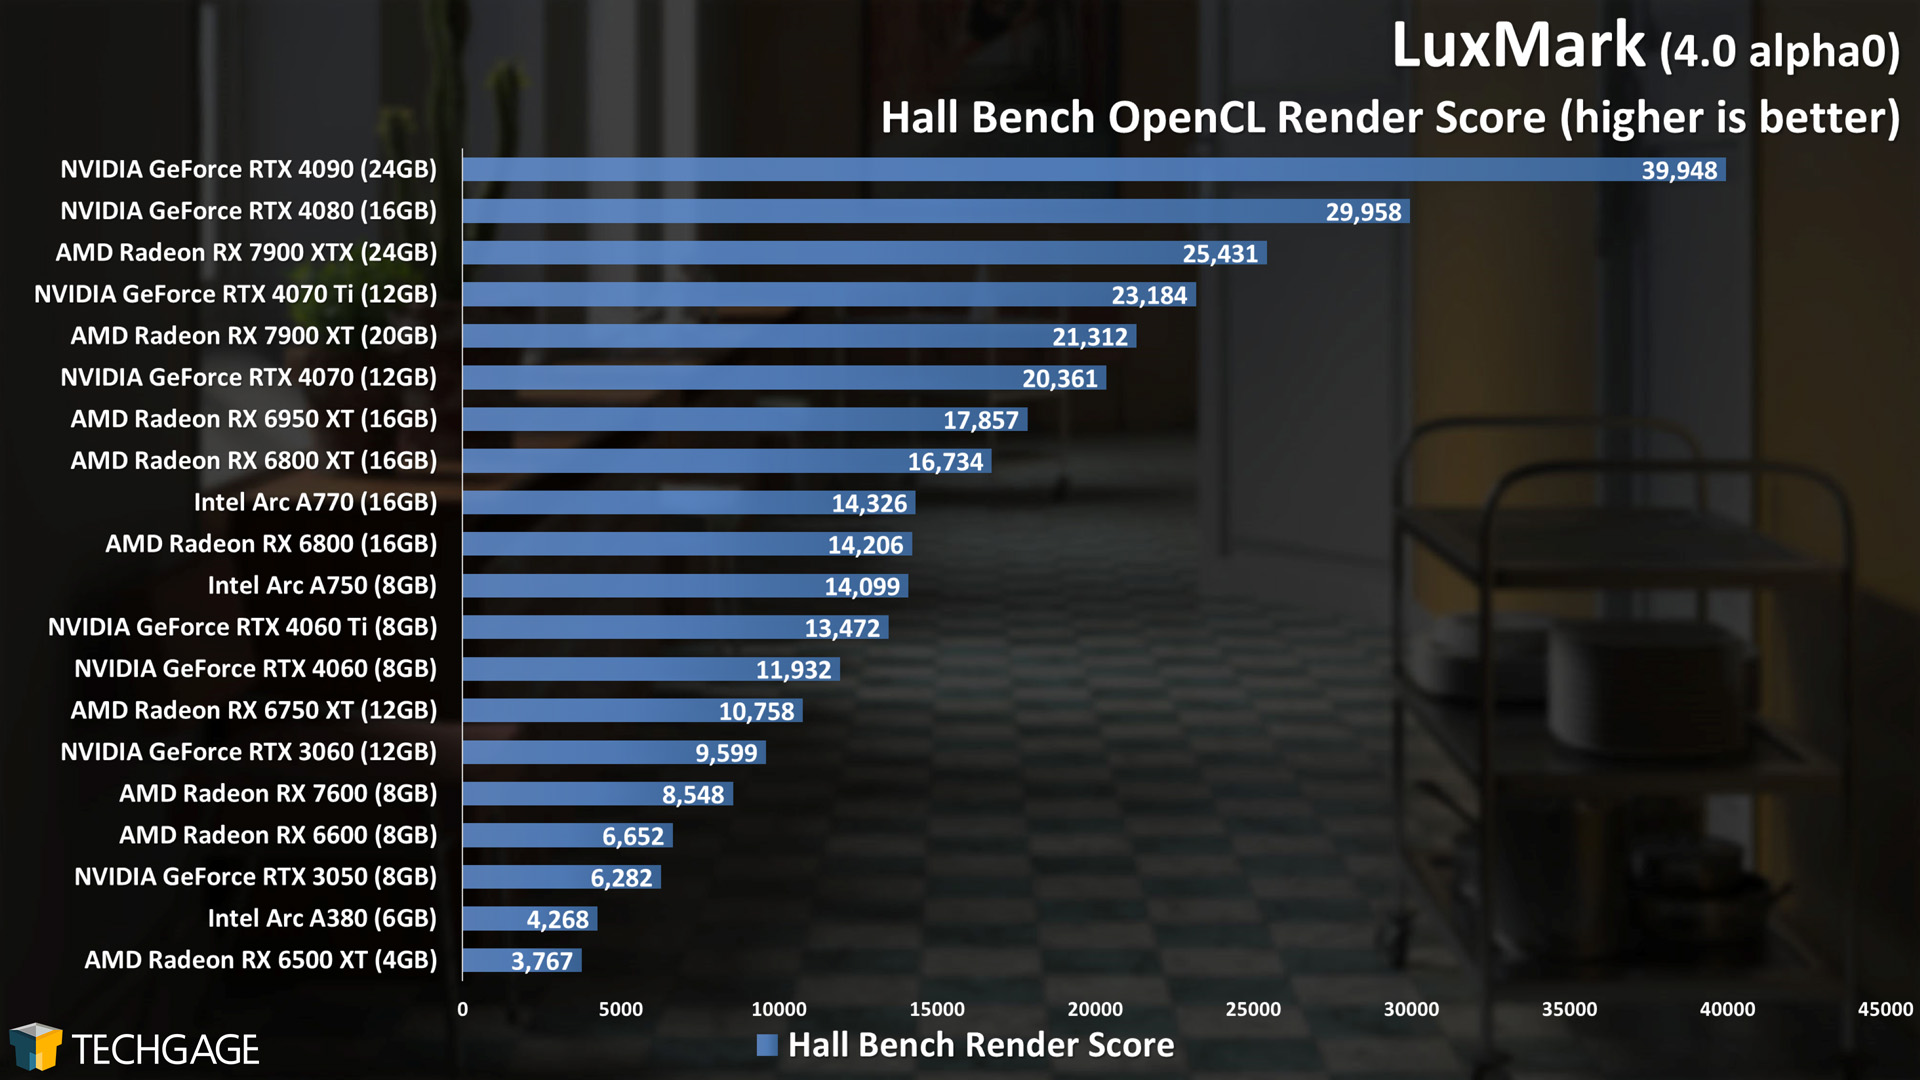 LuxMark - GPU Rendering Score (Hall Bench)